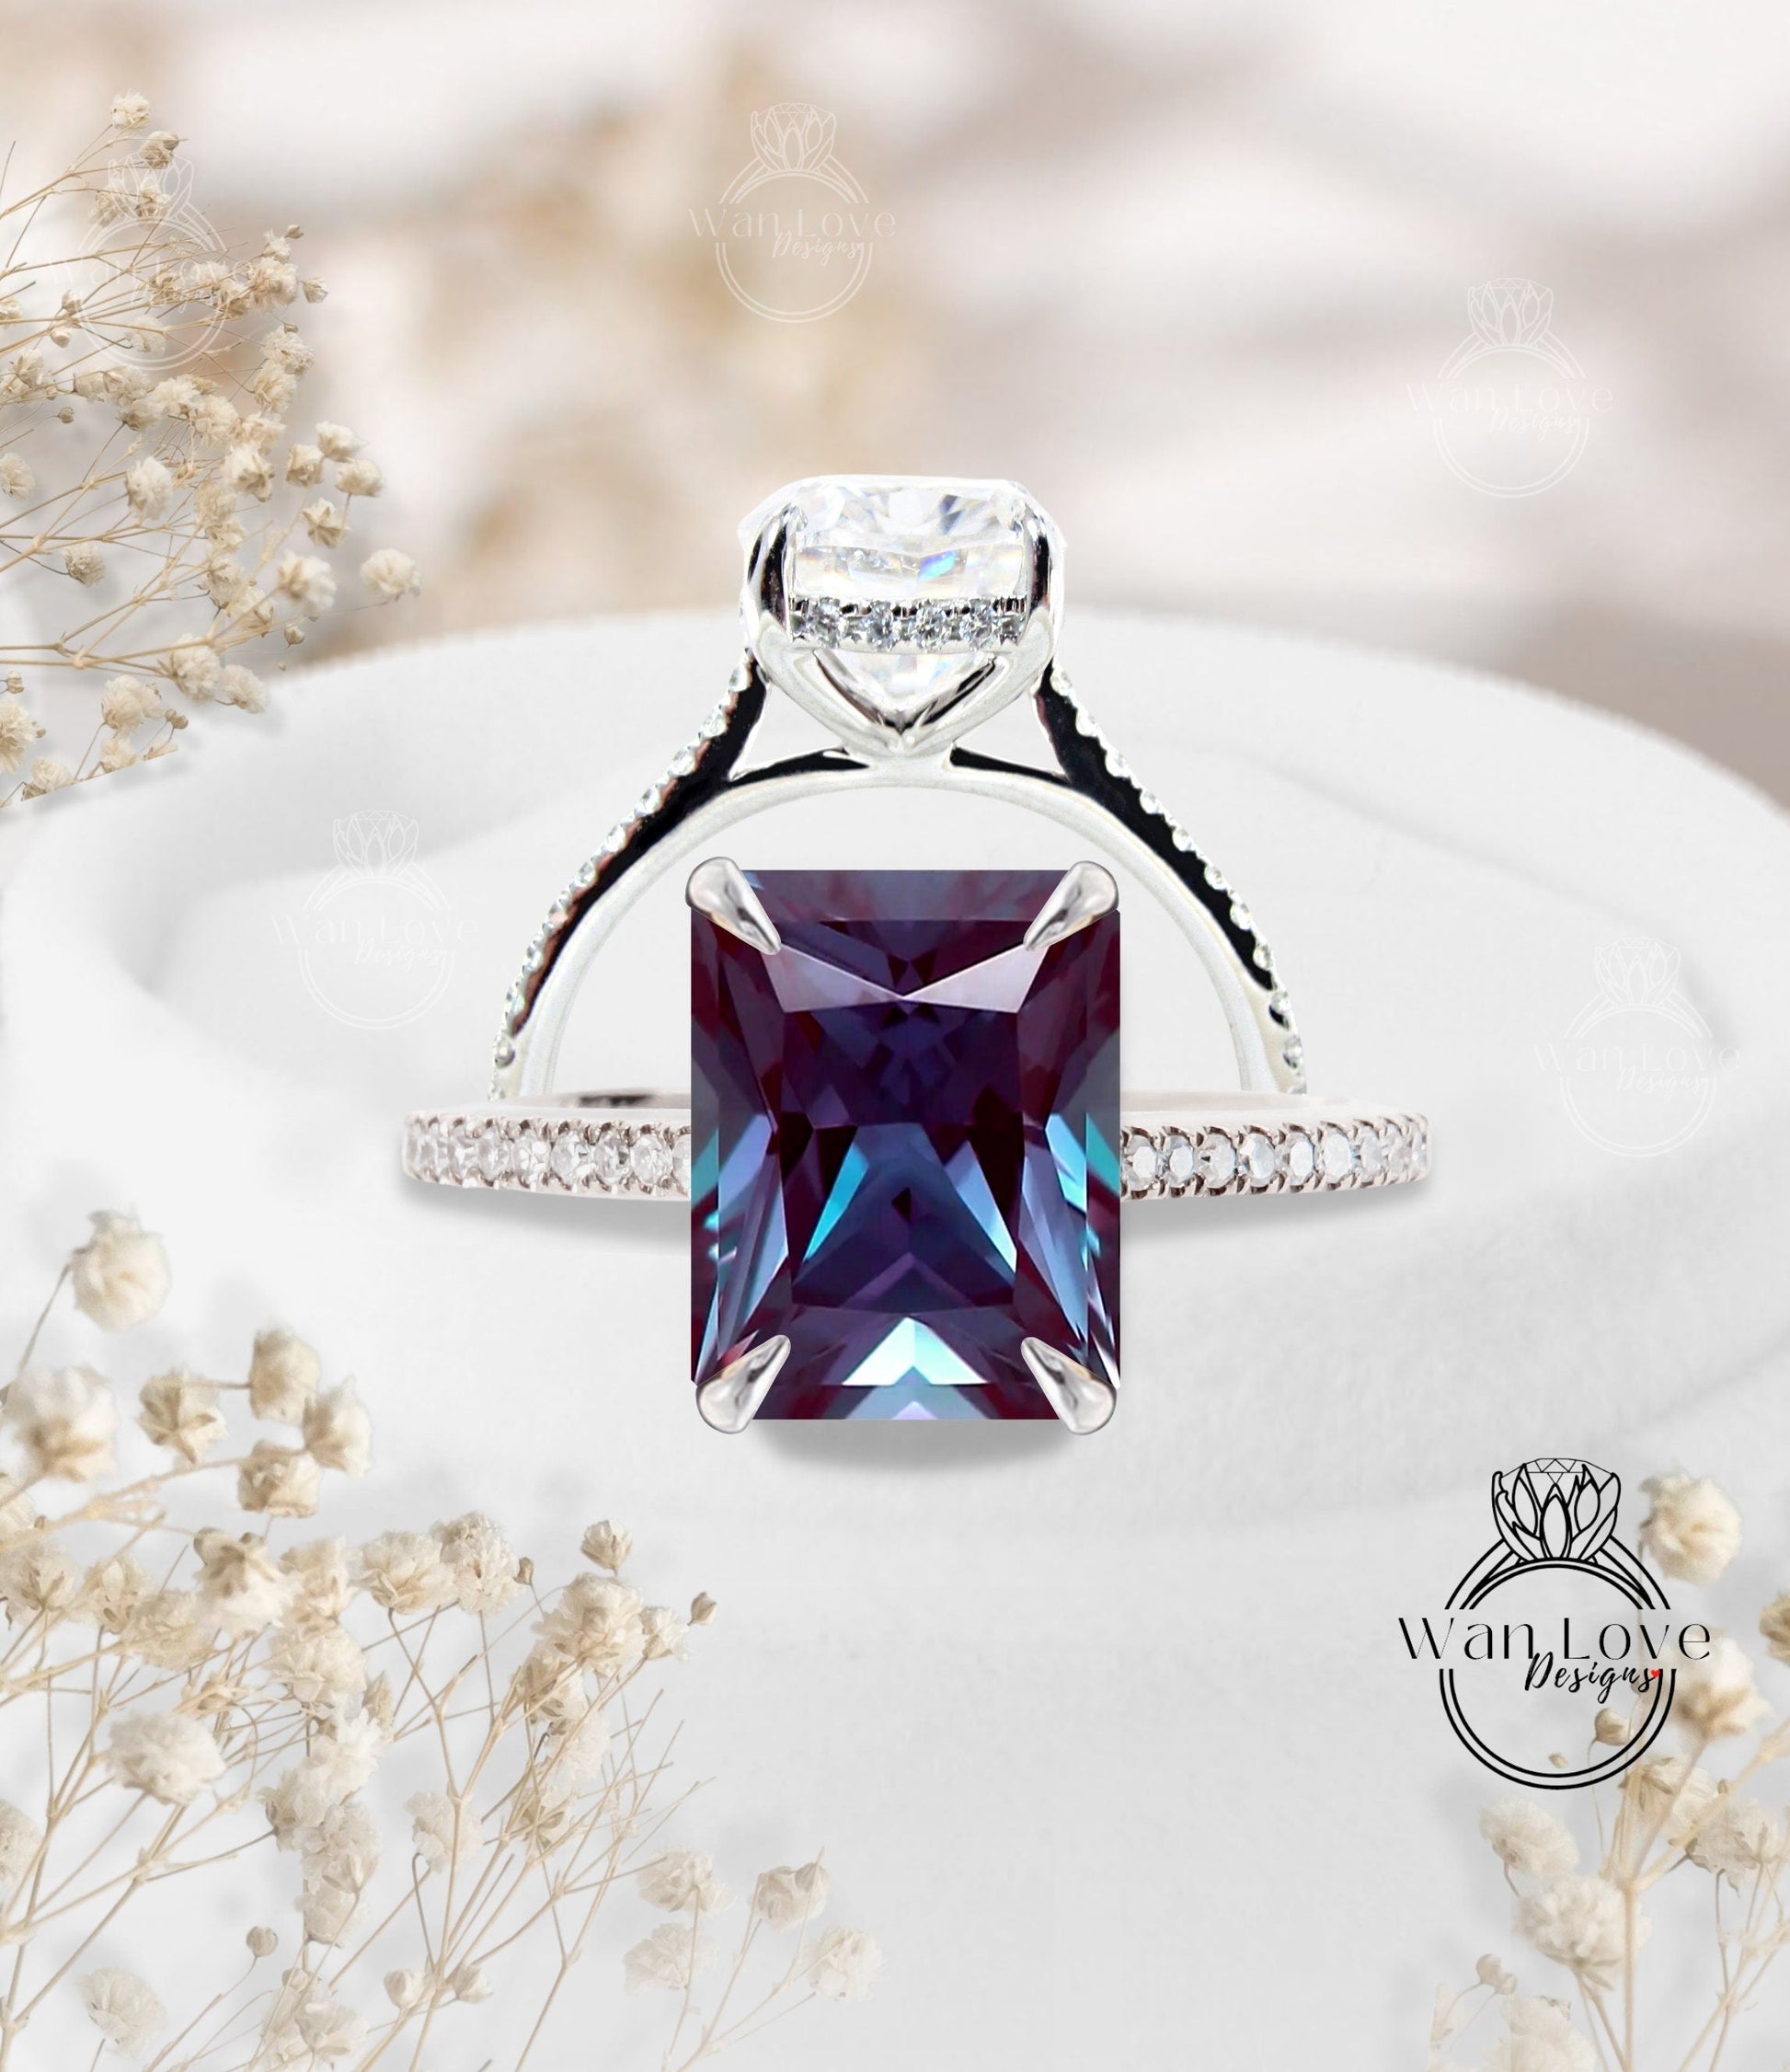 14K Solid Gold Ring/ Emerald Cut Alexandrite Diamond Wedding Ring/ Alexandrite Engagement Ring/ Halo Anniversary Ring/ Rose Gold Ring Wan Love Designs